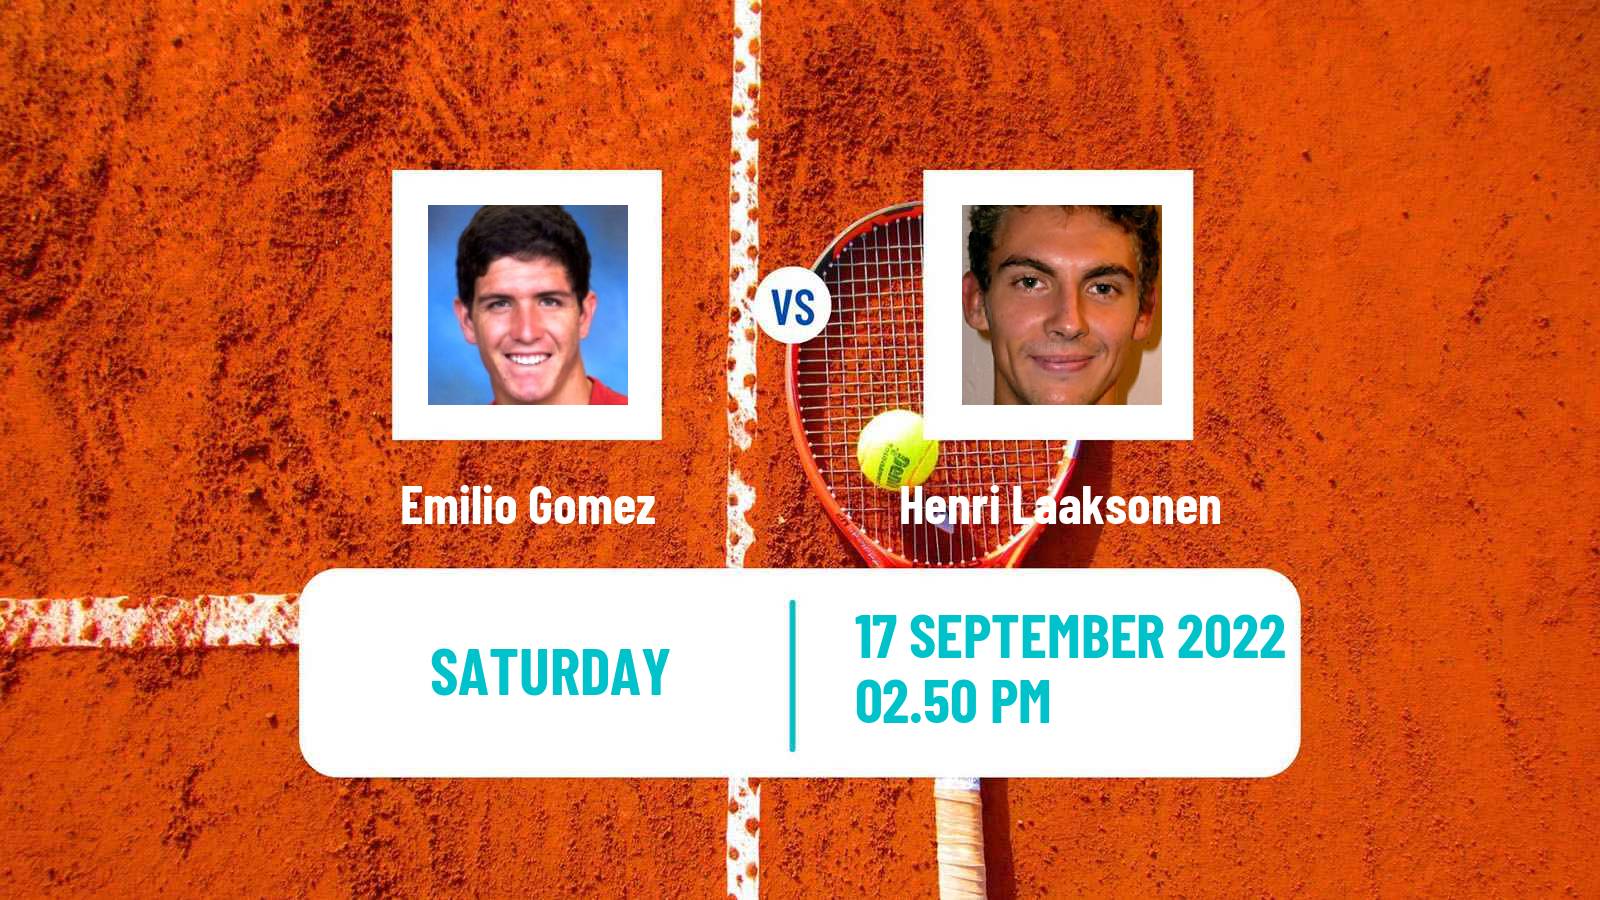 Tennis Davis Cup World Group I Emilio Gomez - Henri Laaksonen